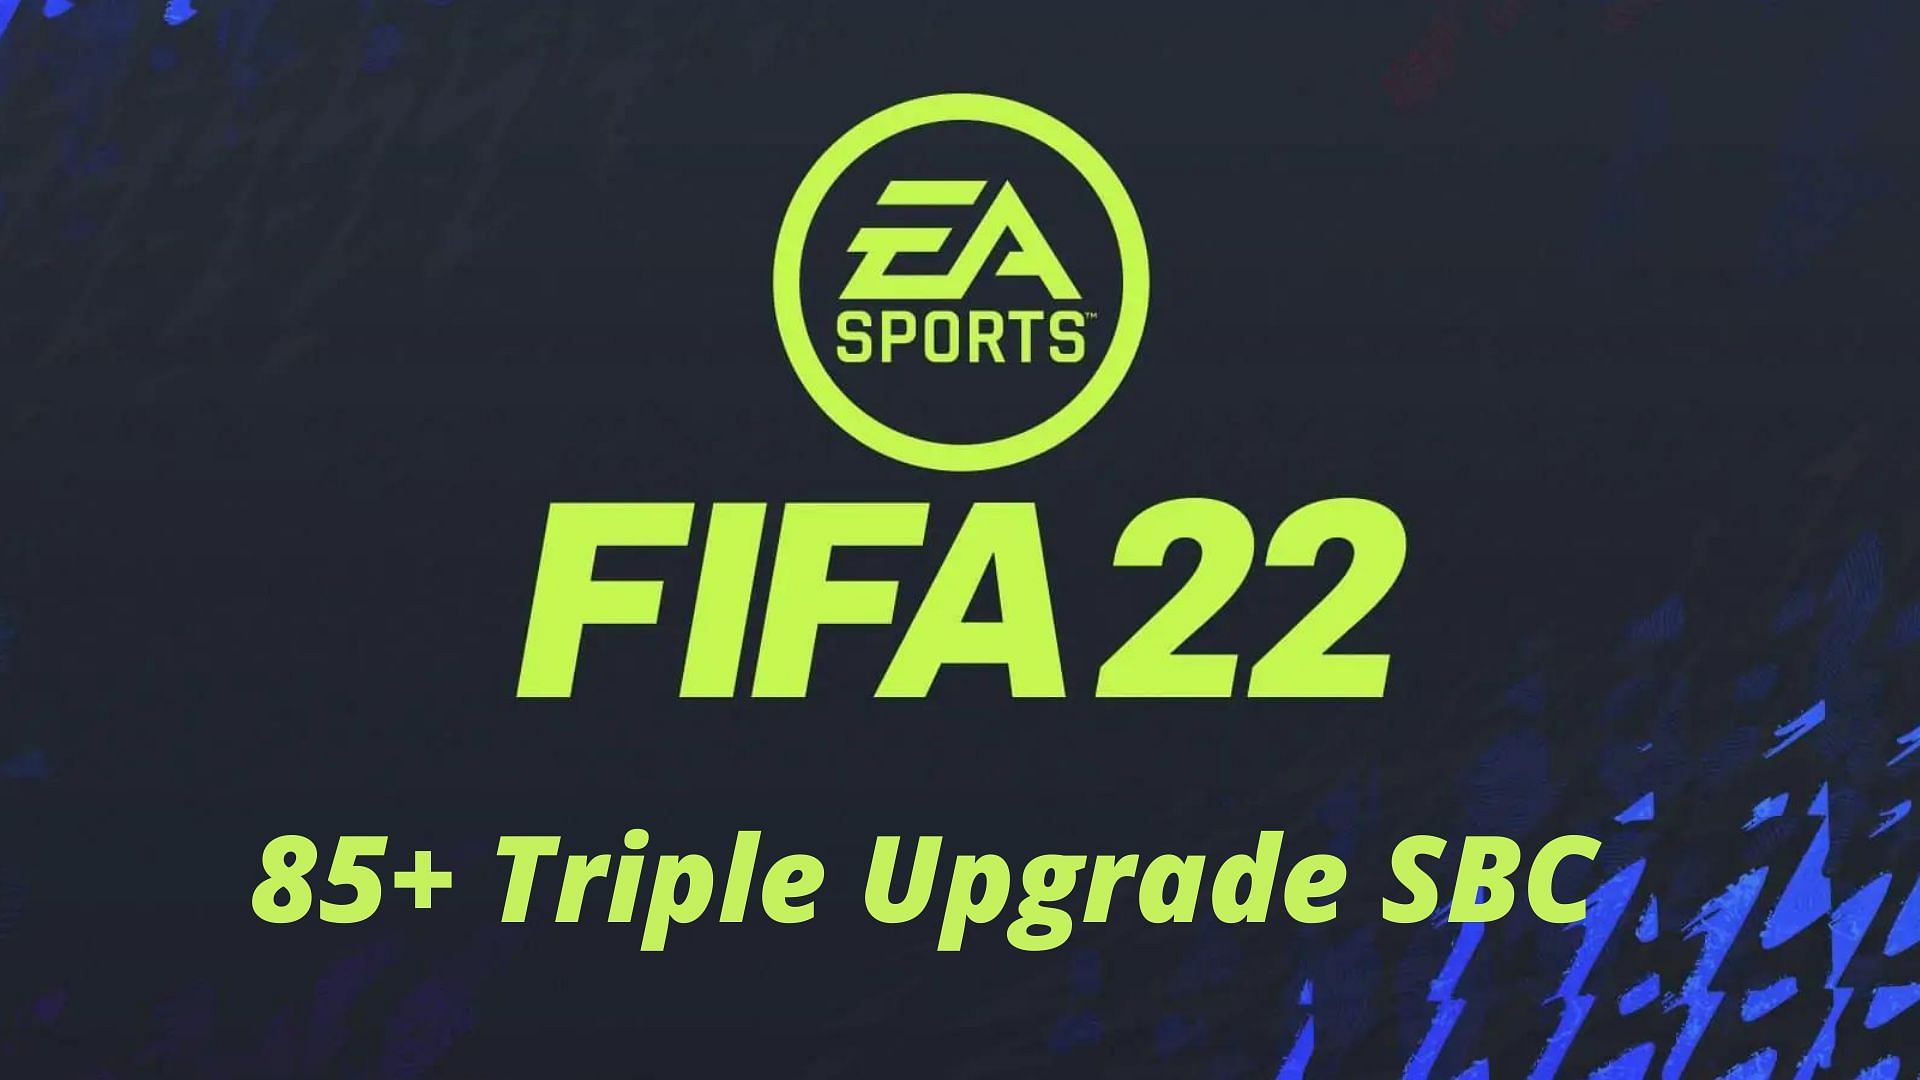 85+ Triple Upgrade SBC is now live in FIFA 22 (Image via Sportskeeda)